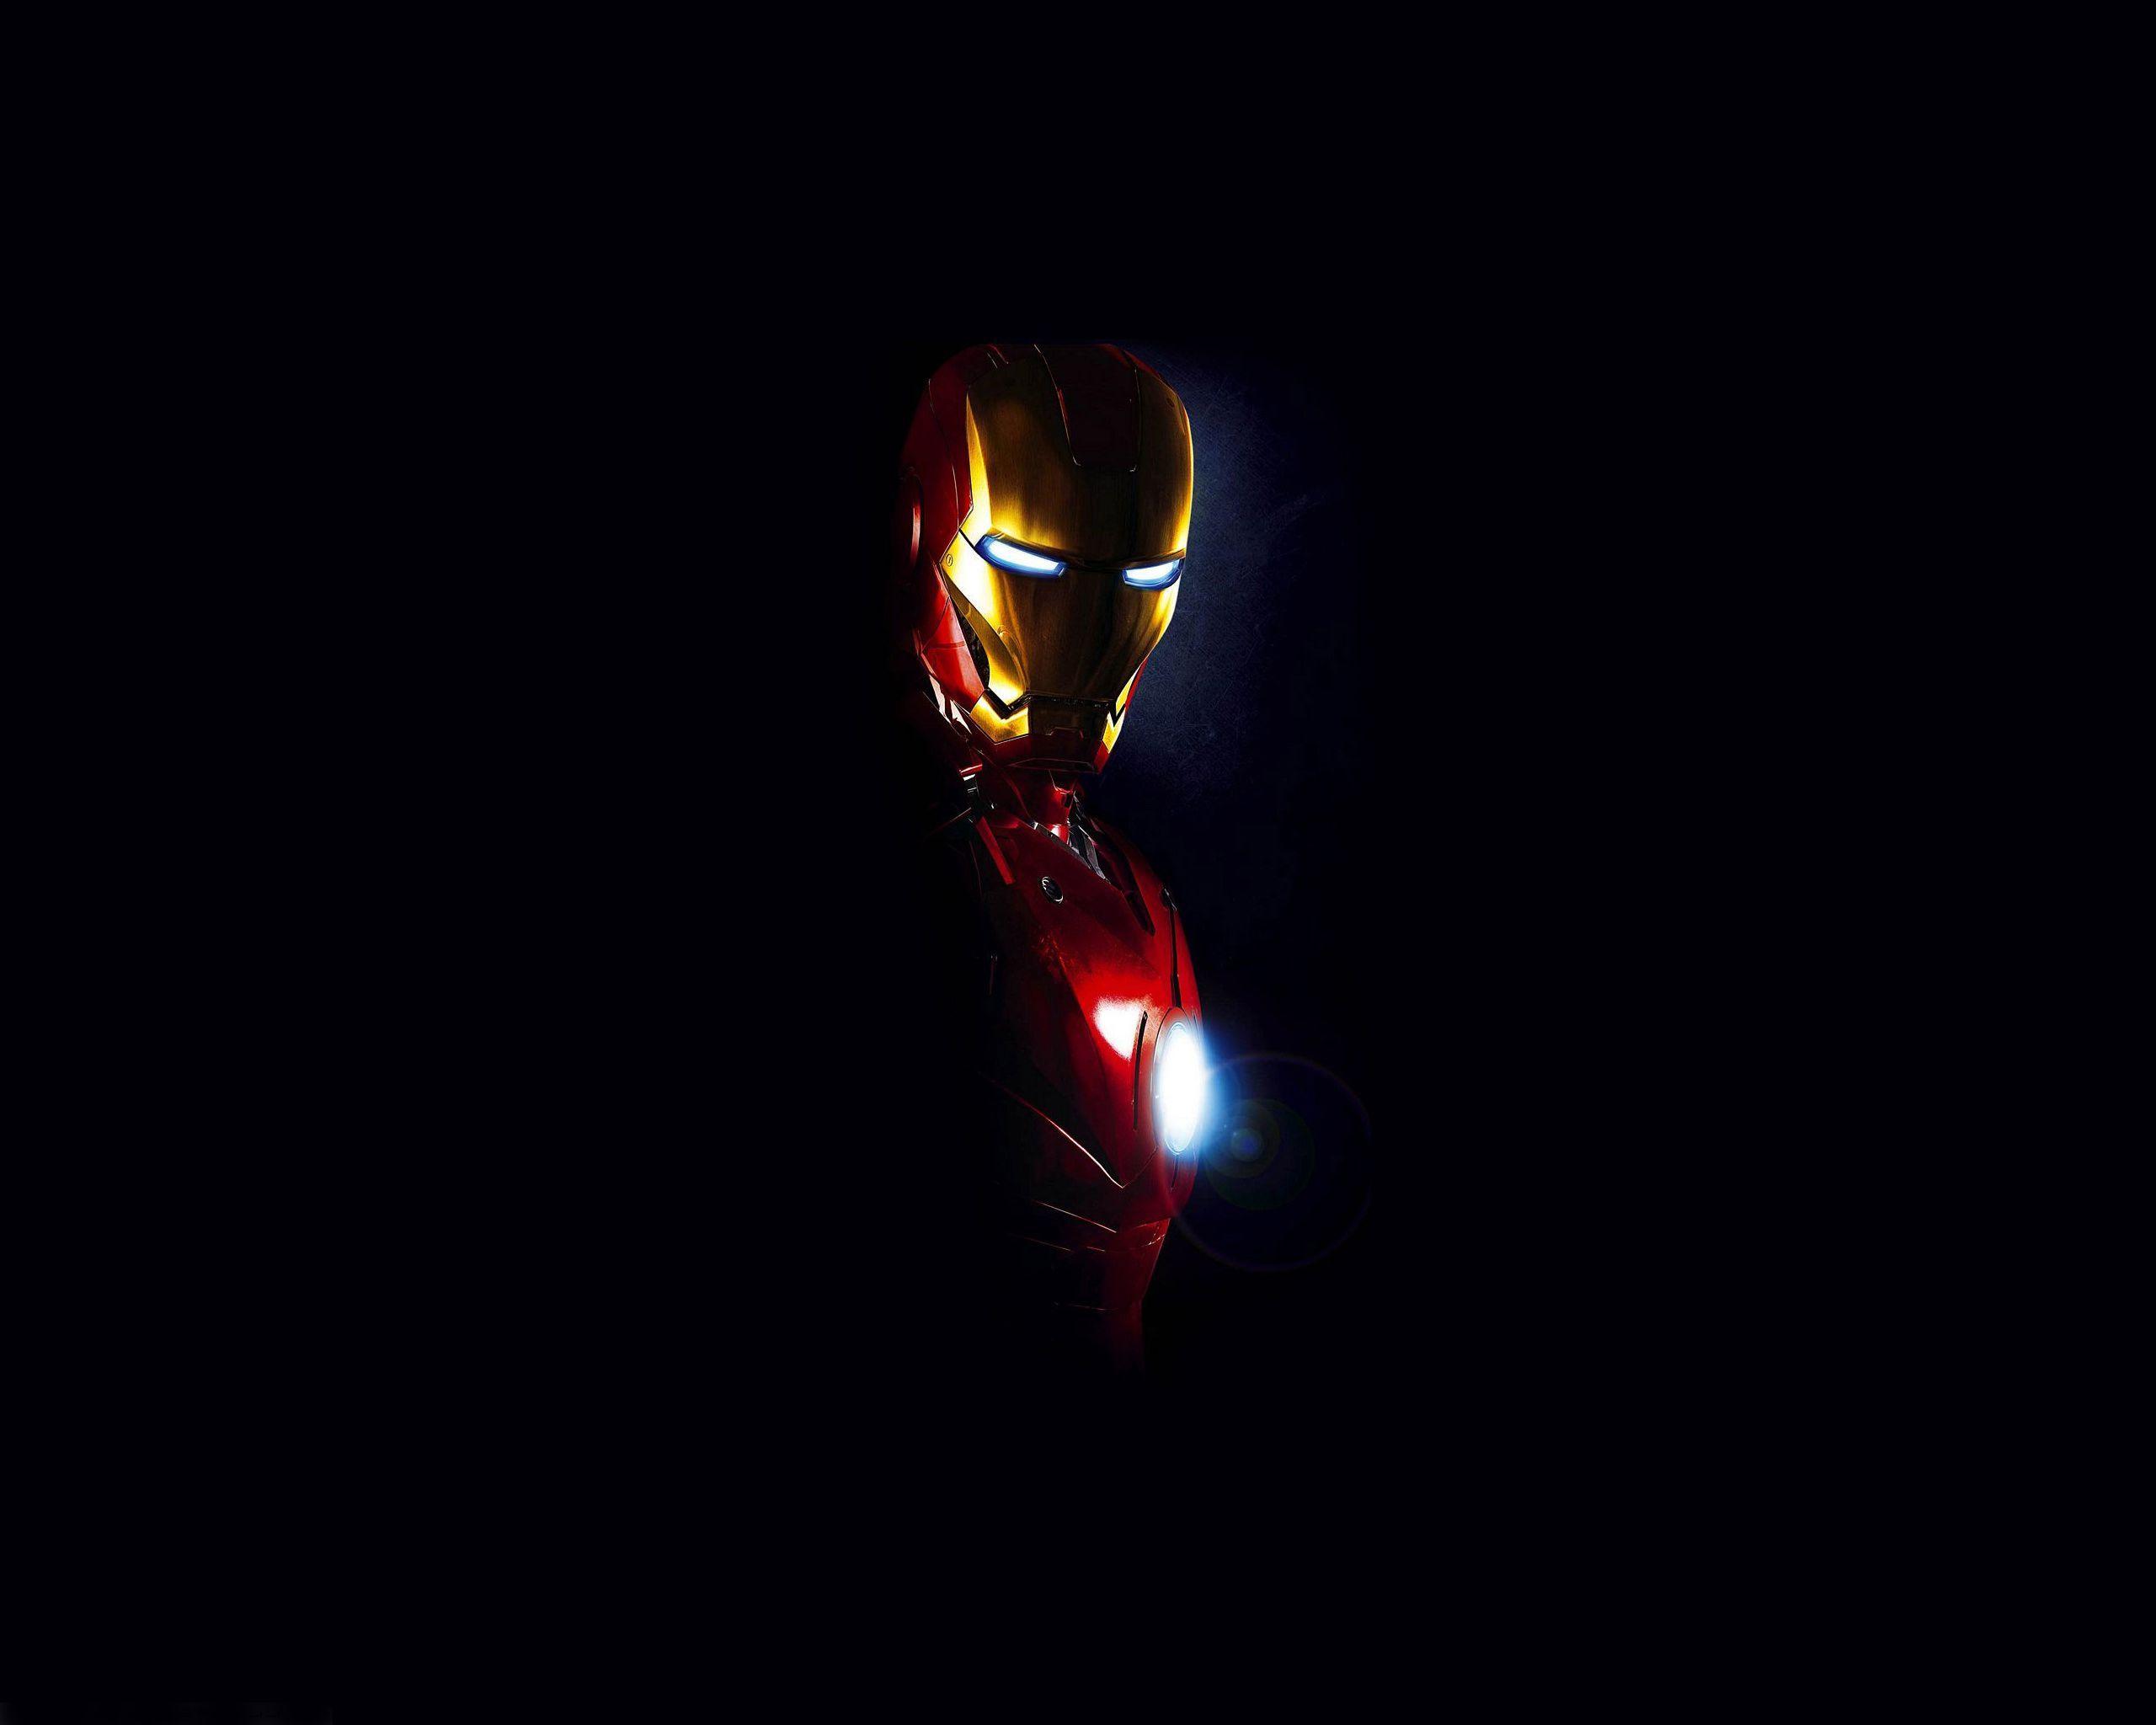 Cool Wallpaper of Iron Man Photo with Dark Background. Iron man